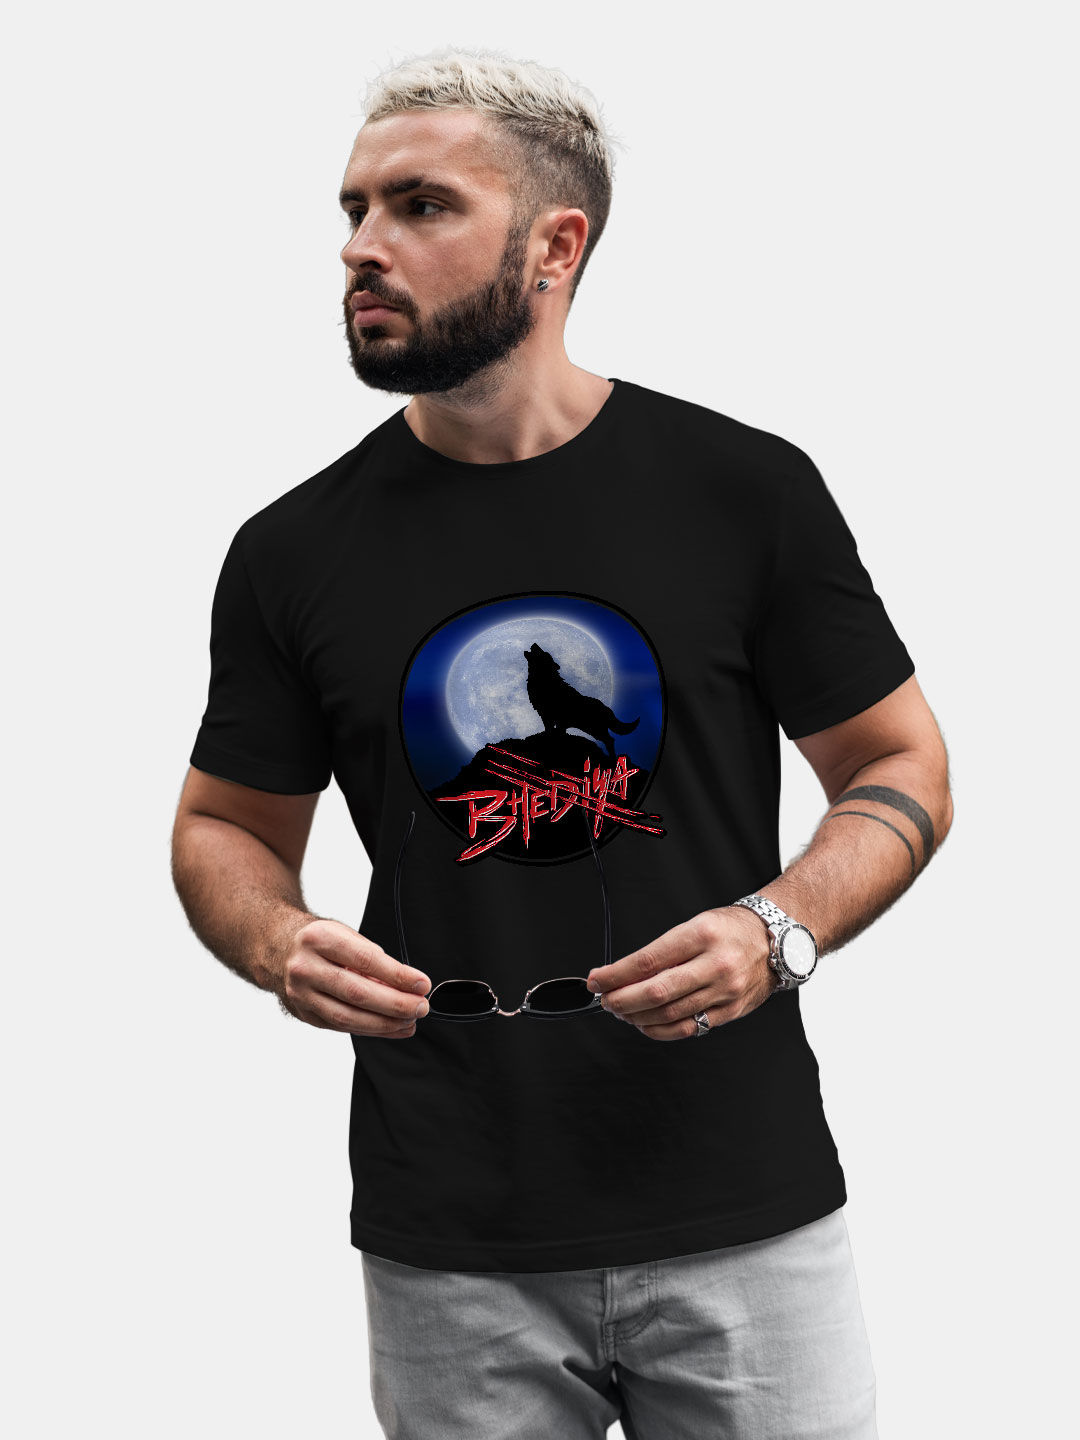 Buy Bhediya Growl Black - Male Designer T-Shirts T-Shirts Online